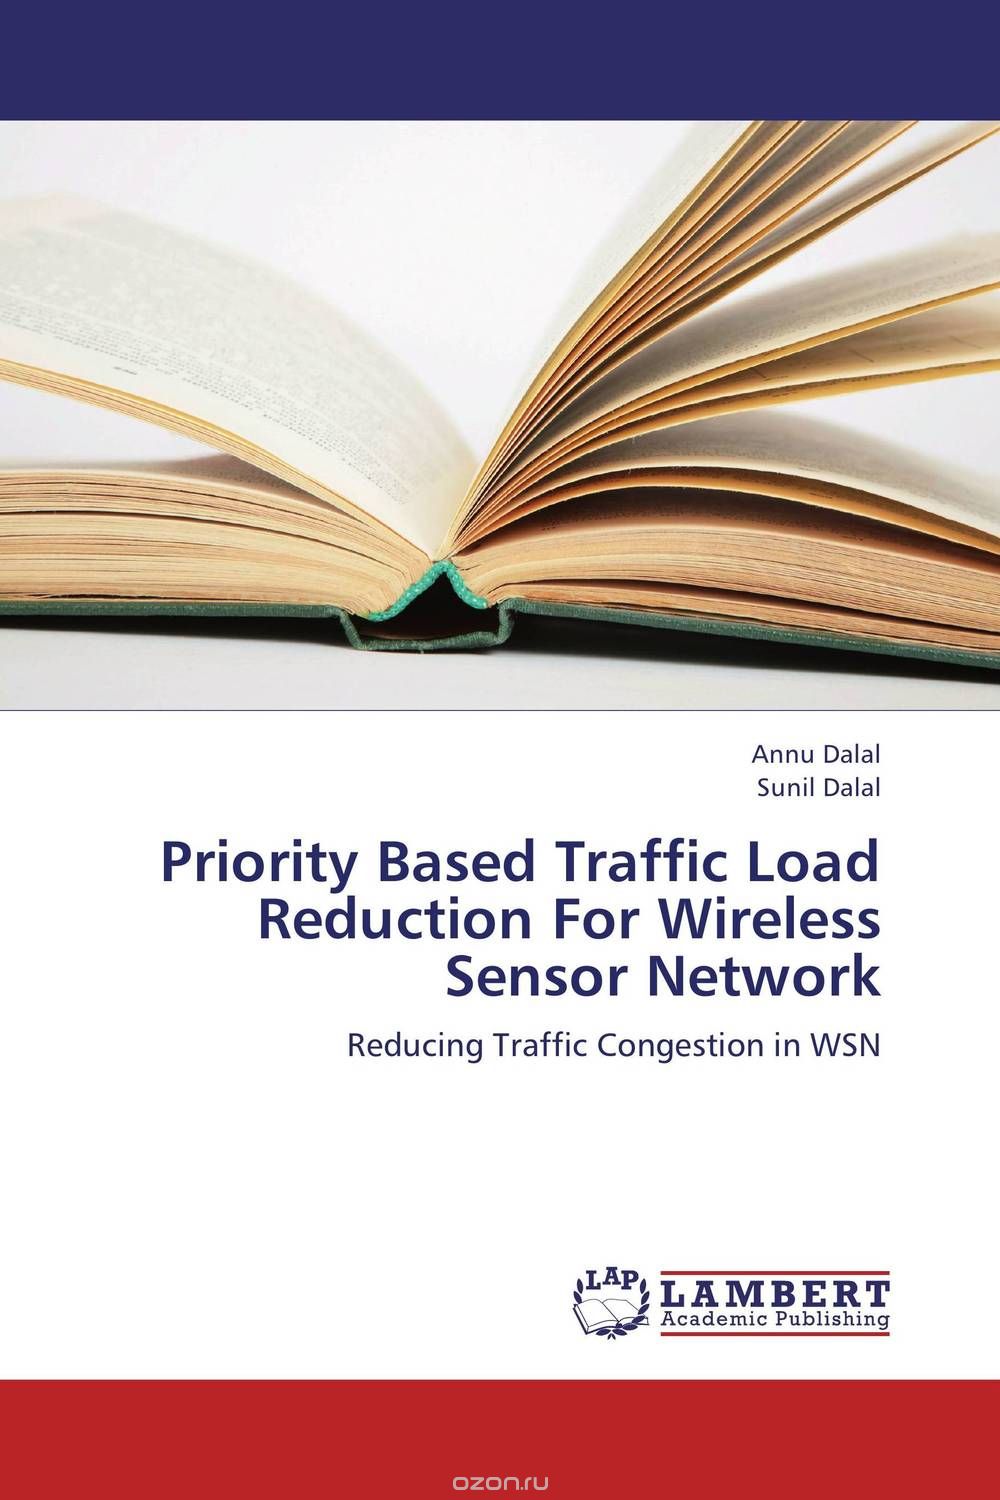 Скачать книгу "Priority Based Traffic Load Reduction For Wireless Sensor Network"